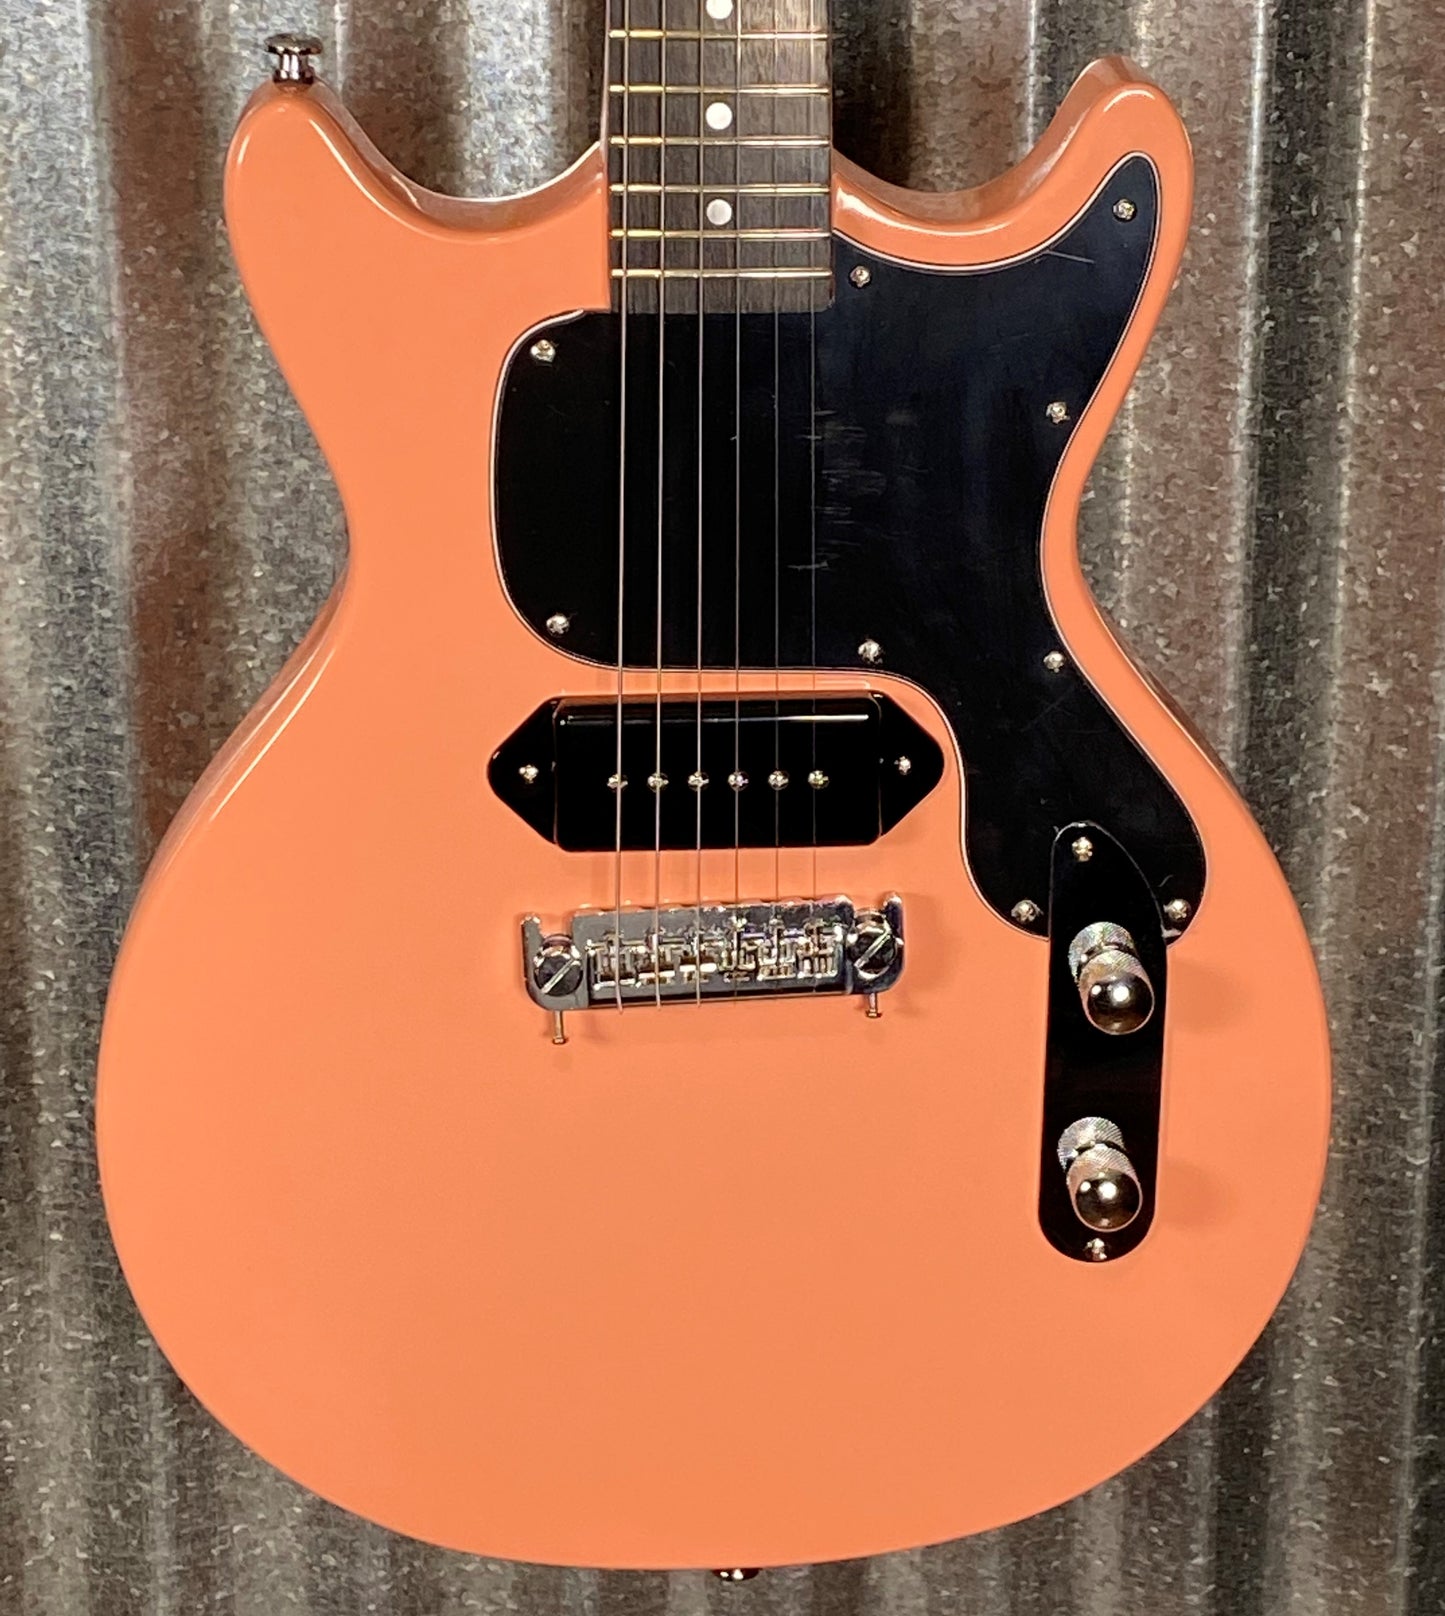 Westcreek DC LP Junior P90 Sunset Coral Guitar #0129 Used